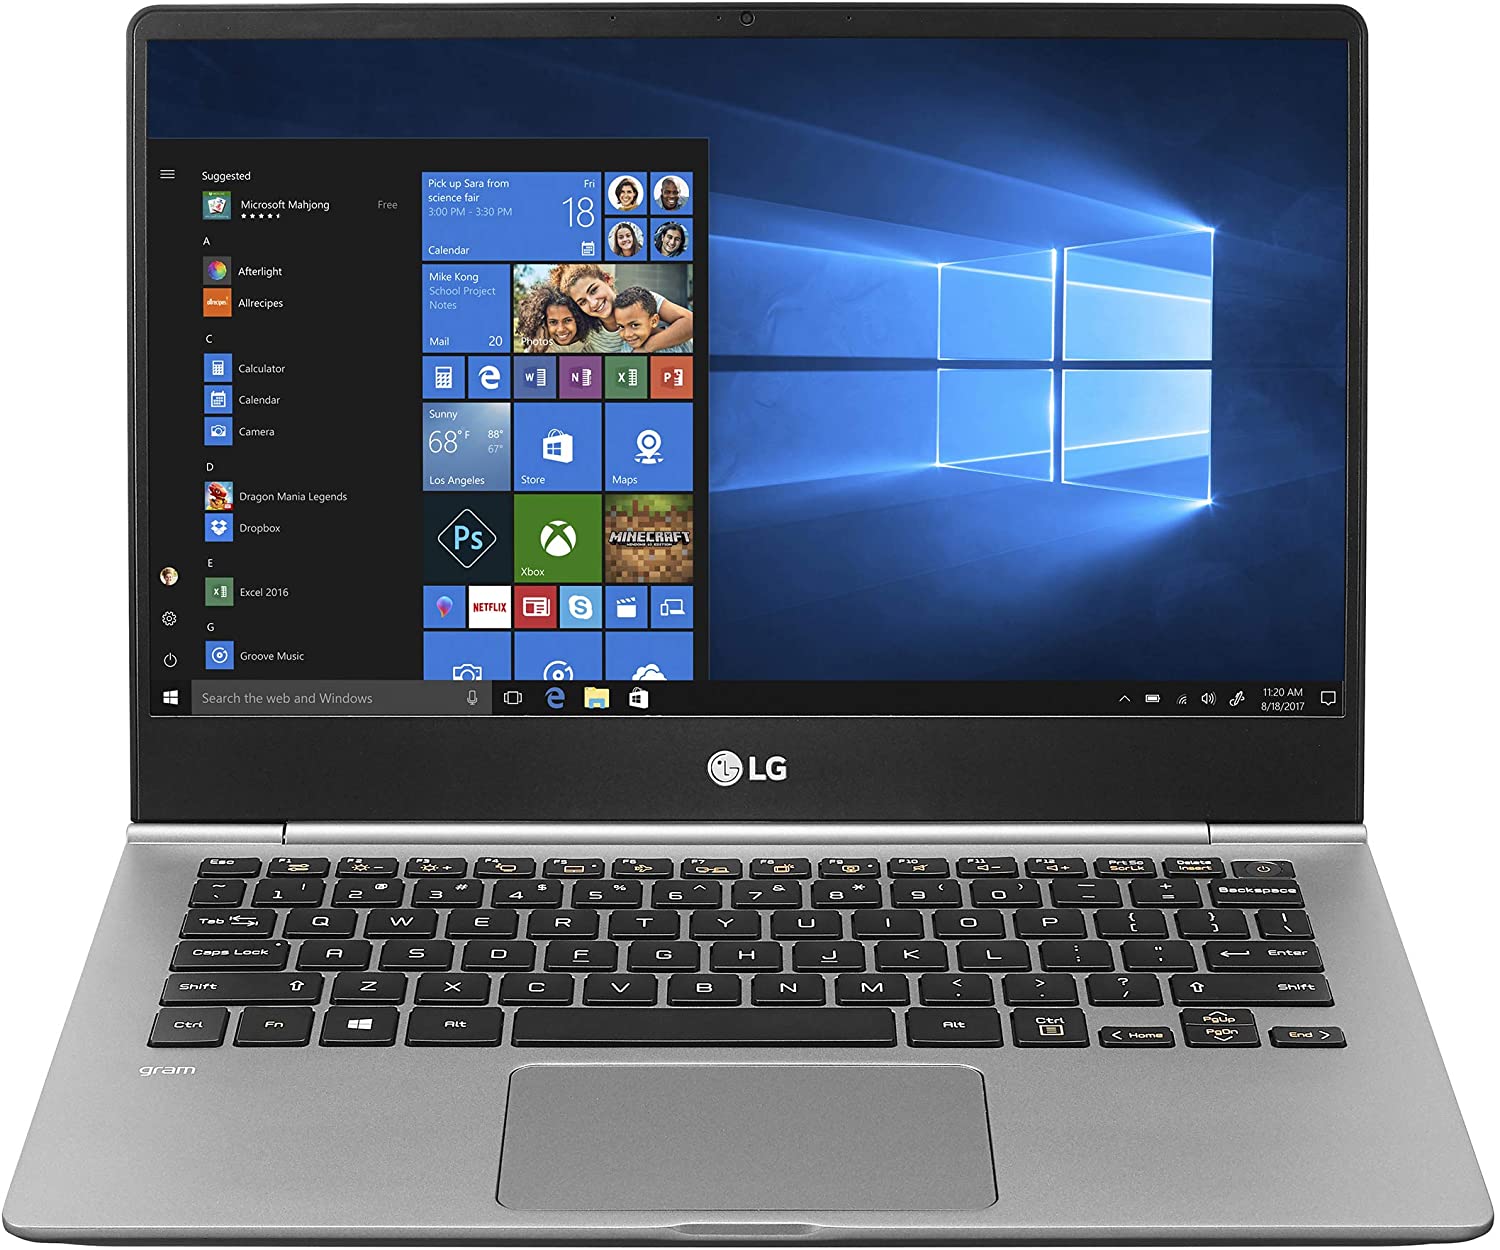 LG Gram Laptop with 2 USB 3.0 Ports